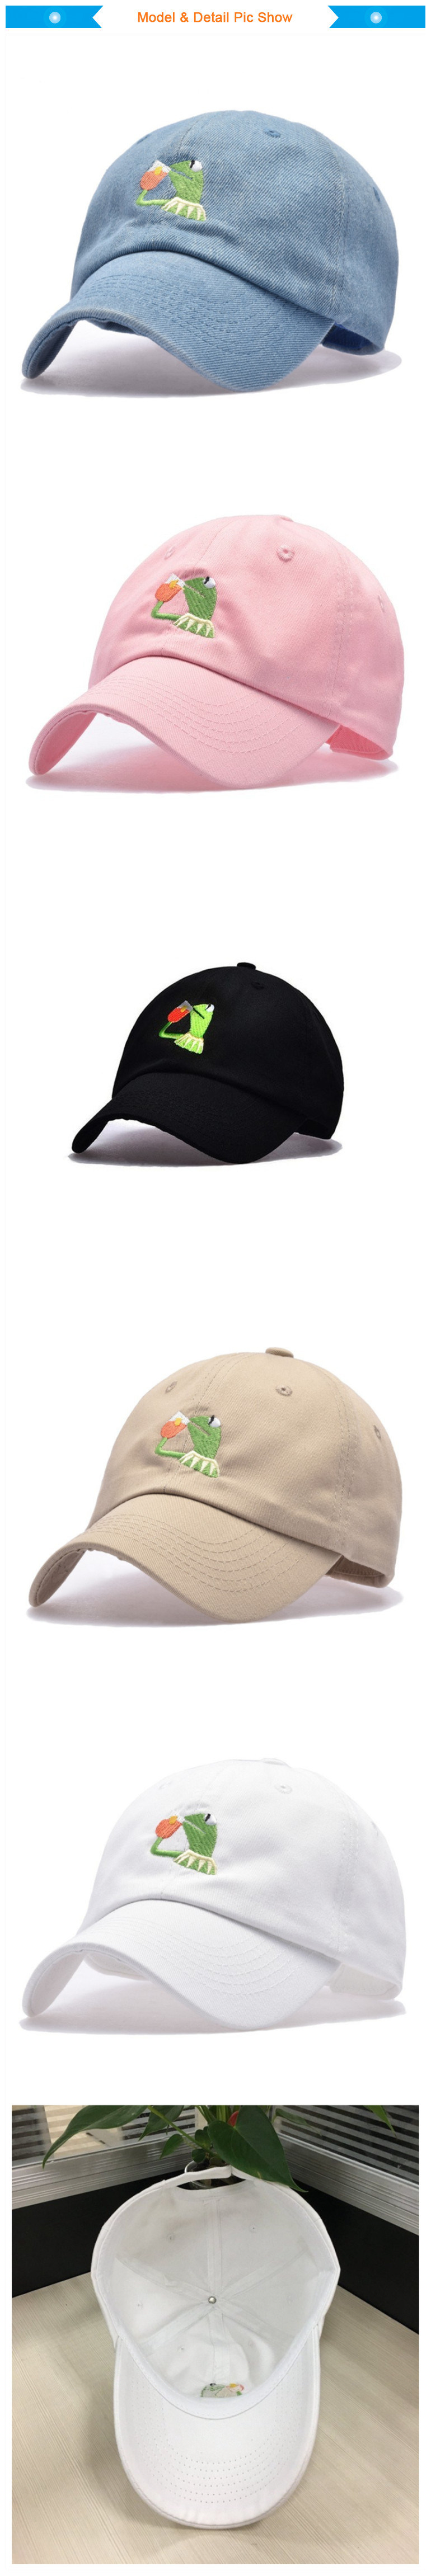 Embroidery Snapback Baseball Cap Visor Hat Gorras Casquette Cotton Cap